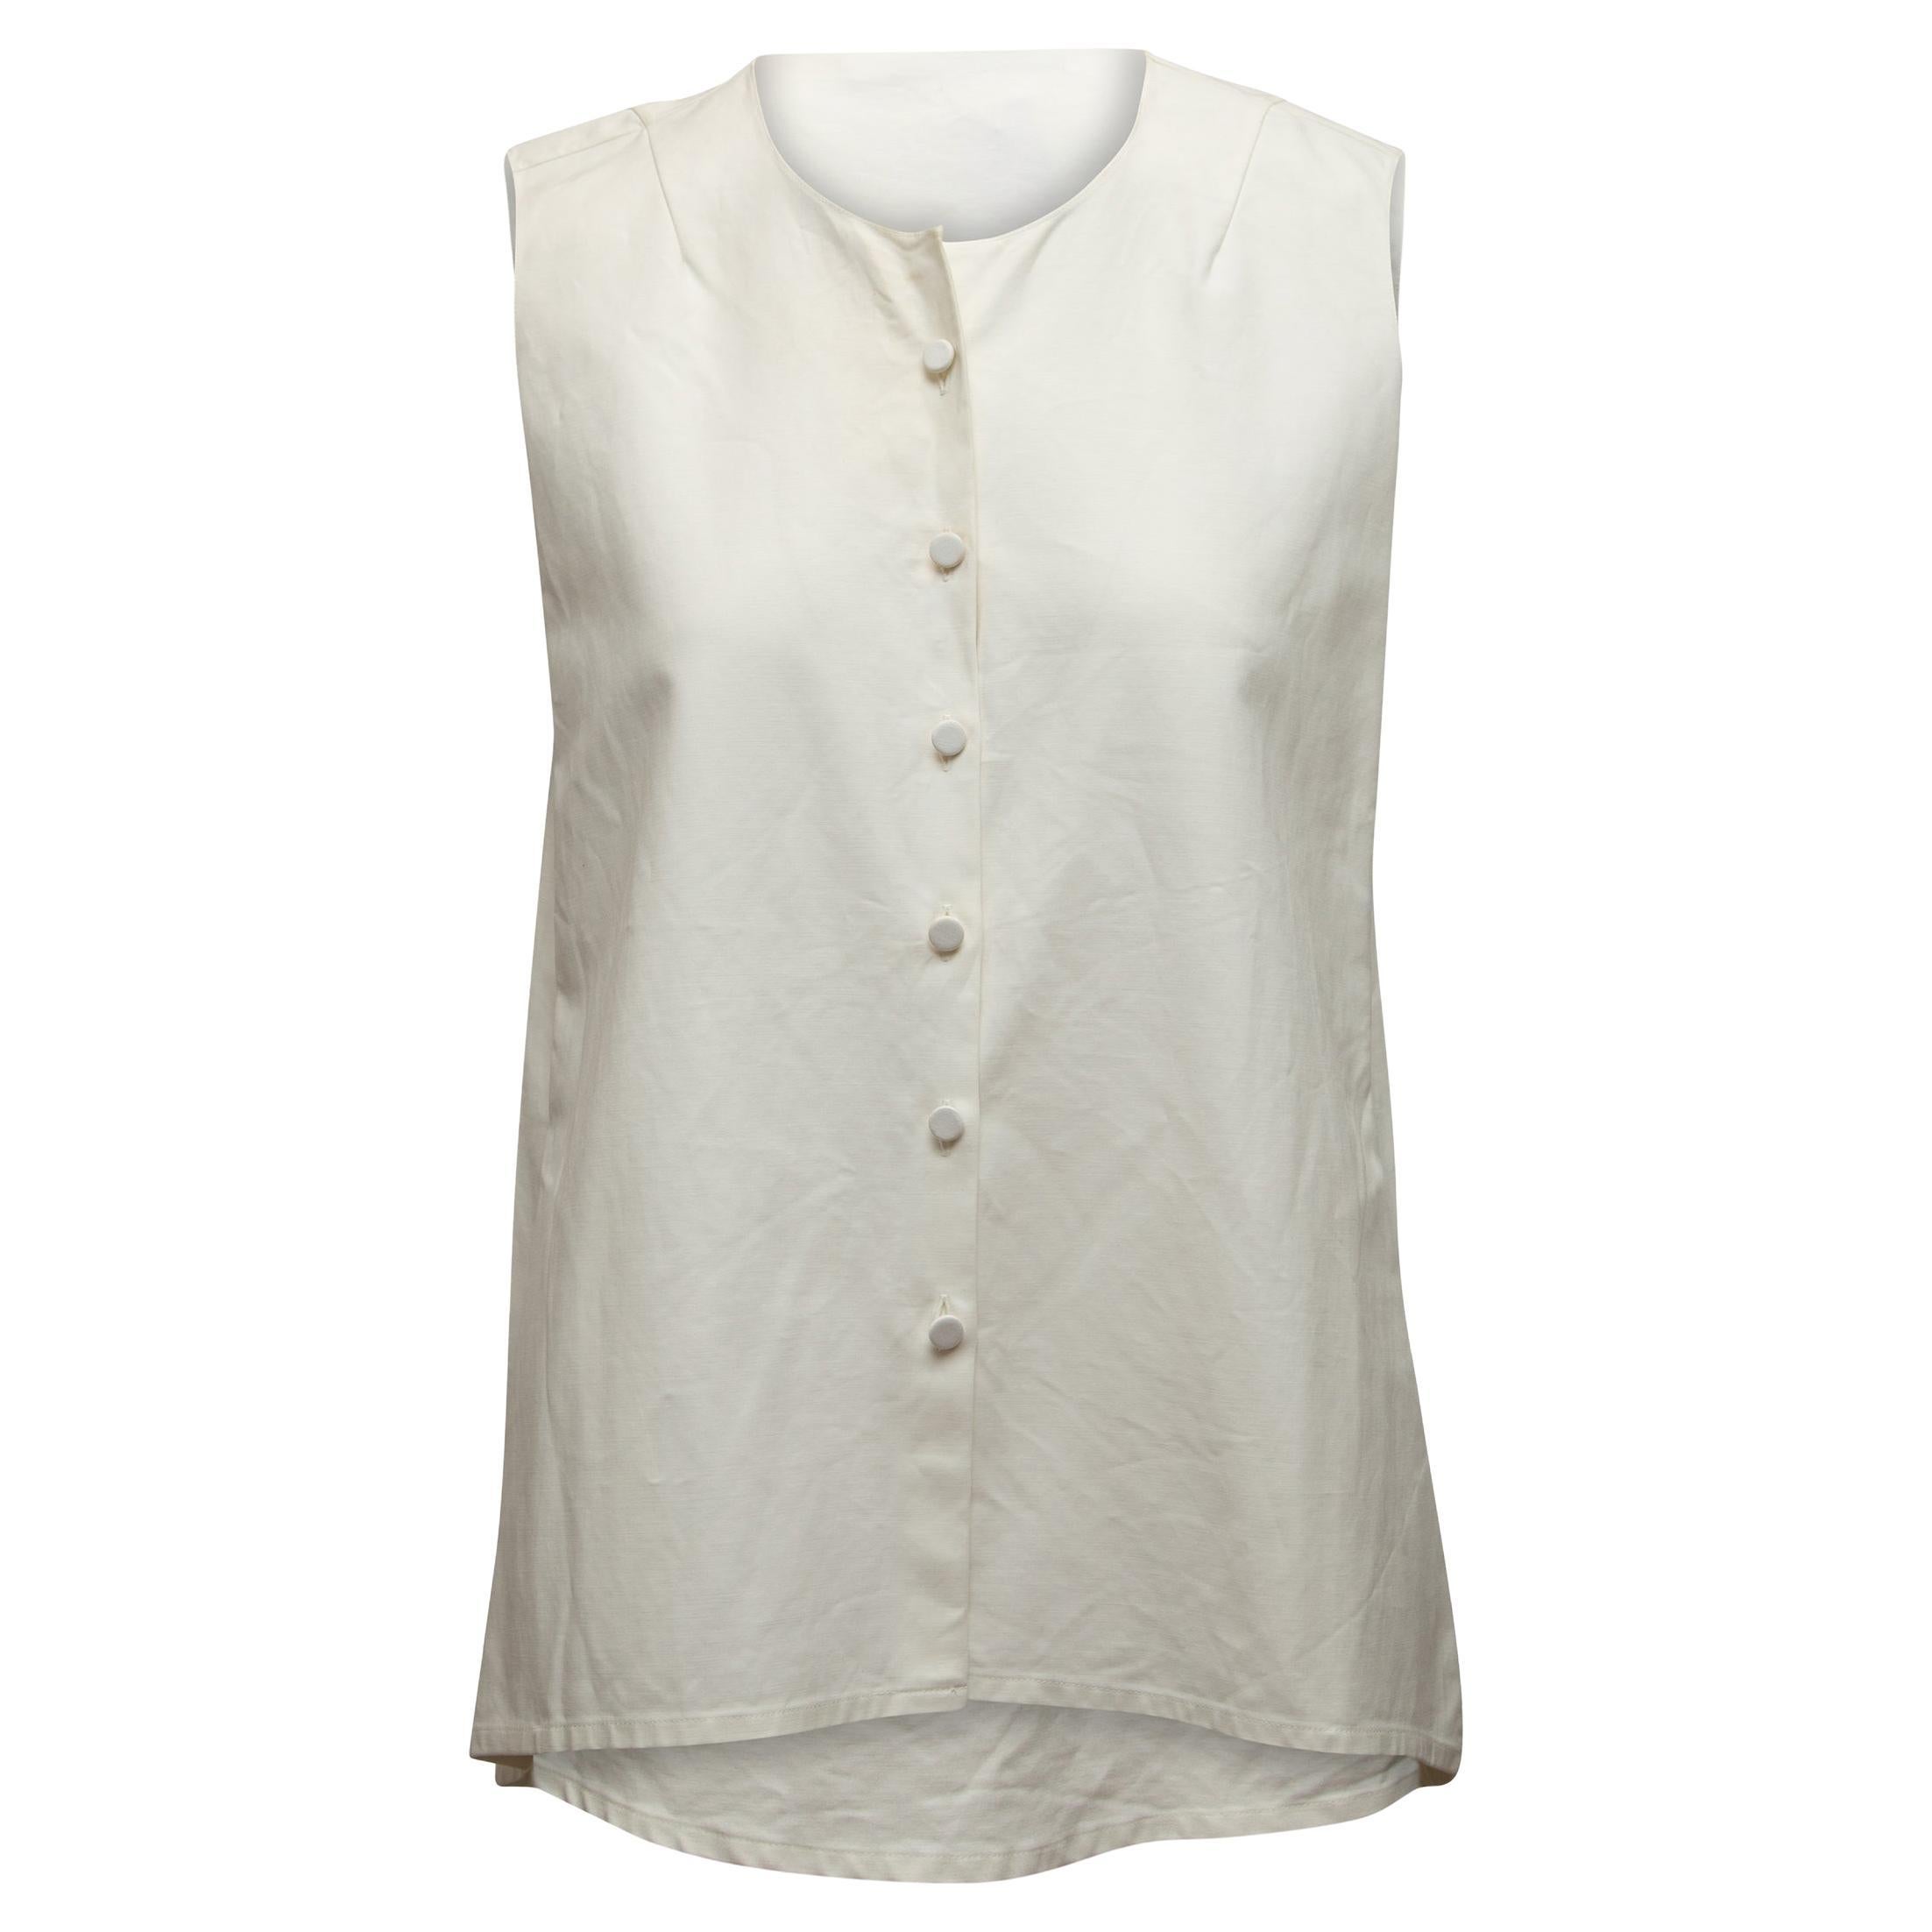 Christian Dior White Sleeveless Button-Up Top